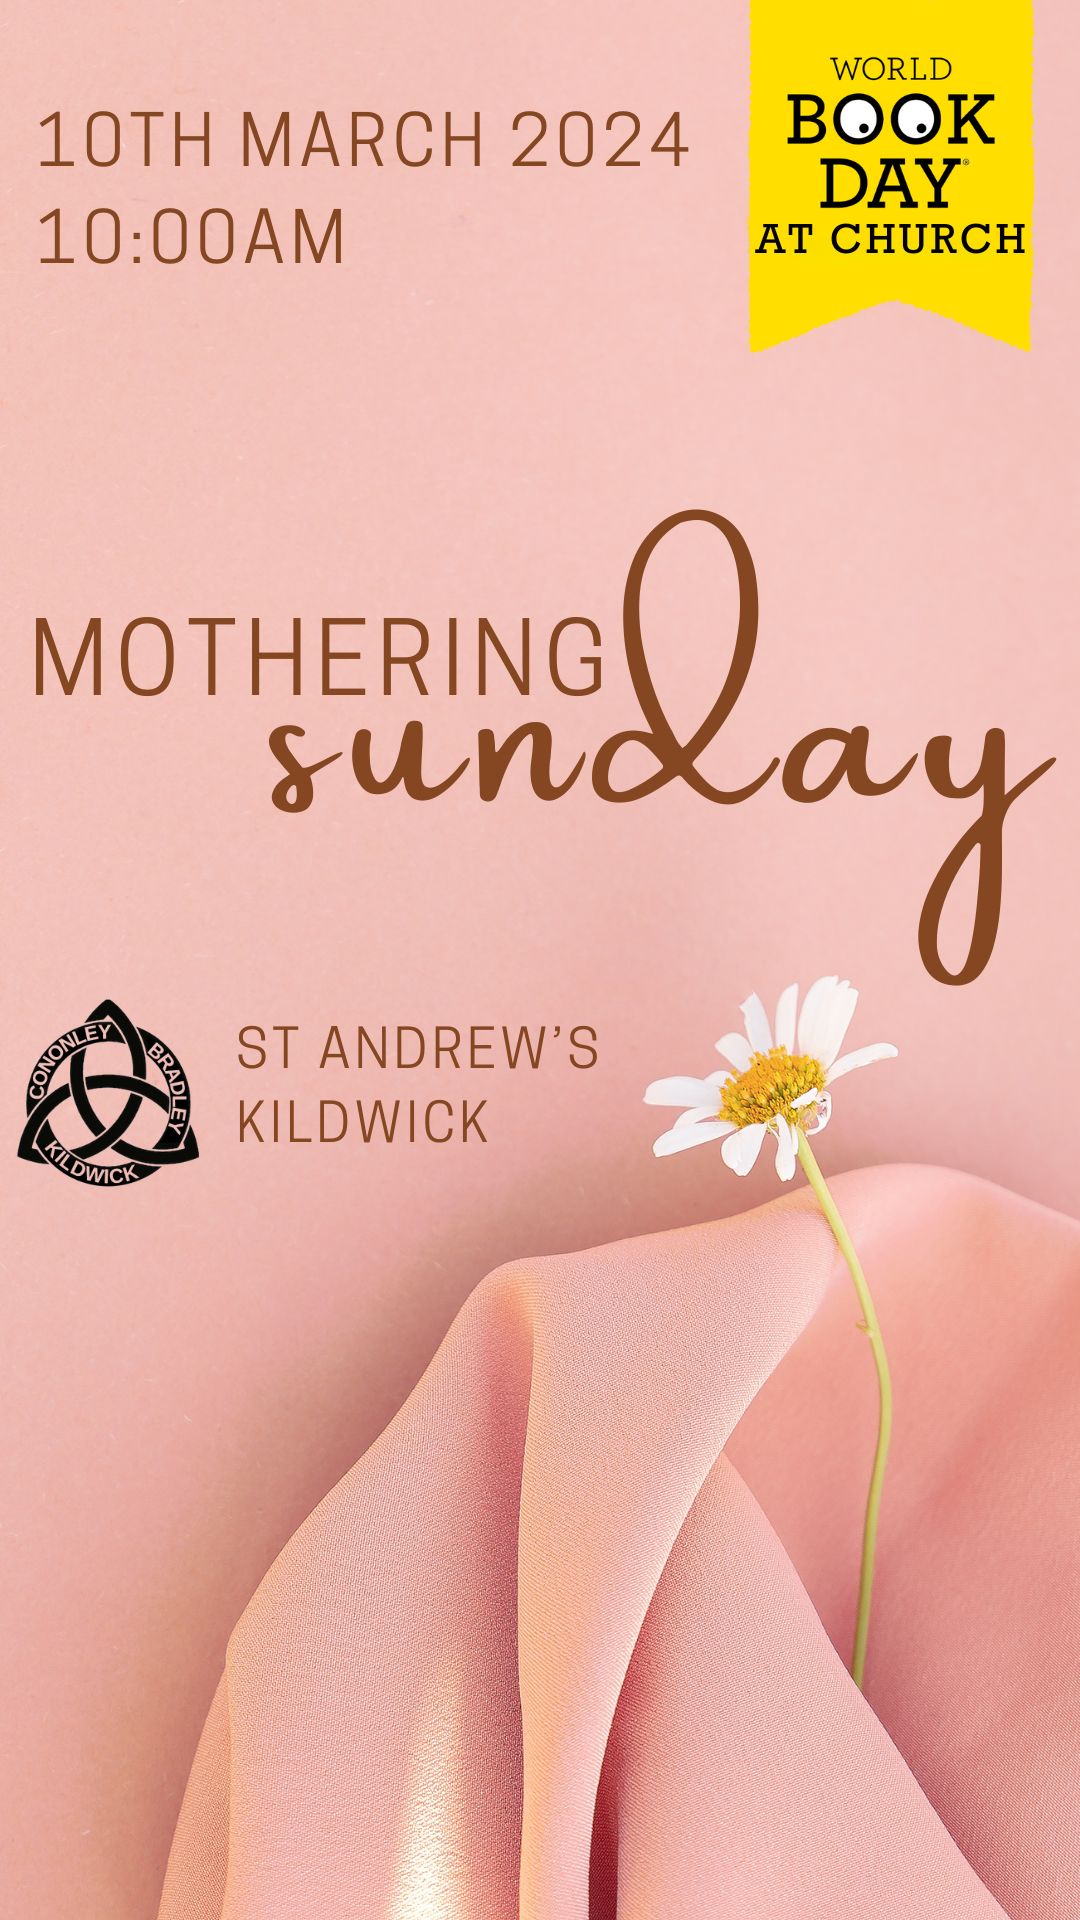 World Book Day/Mothering Sunday